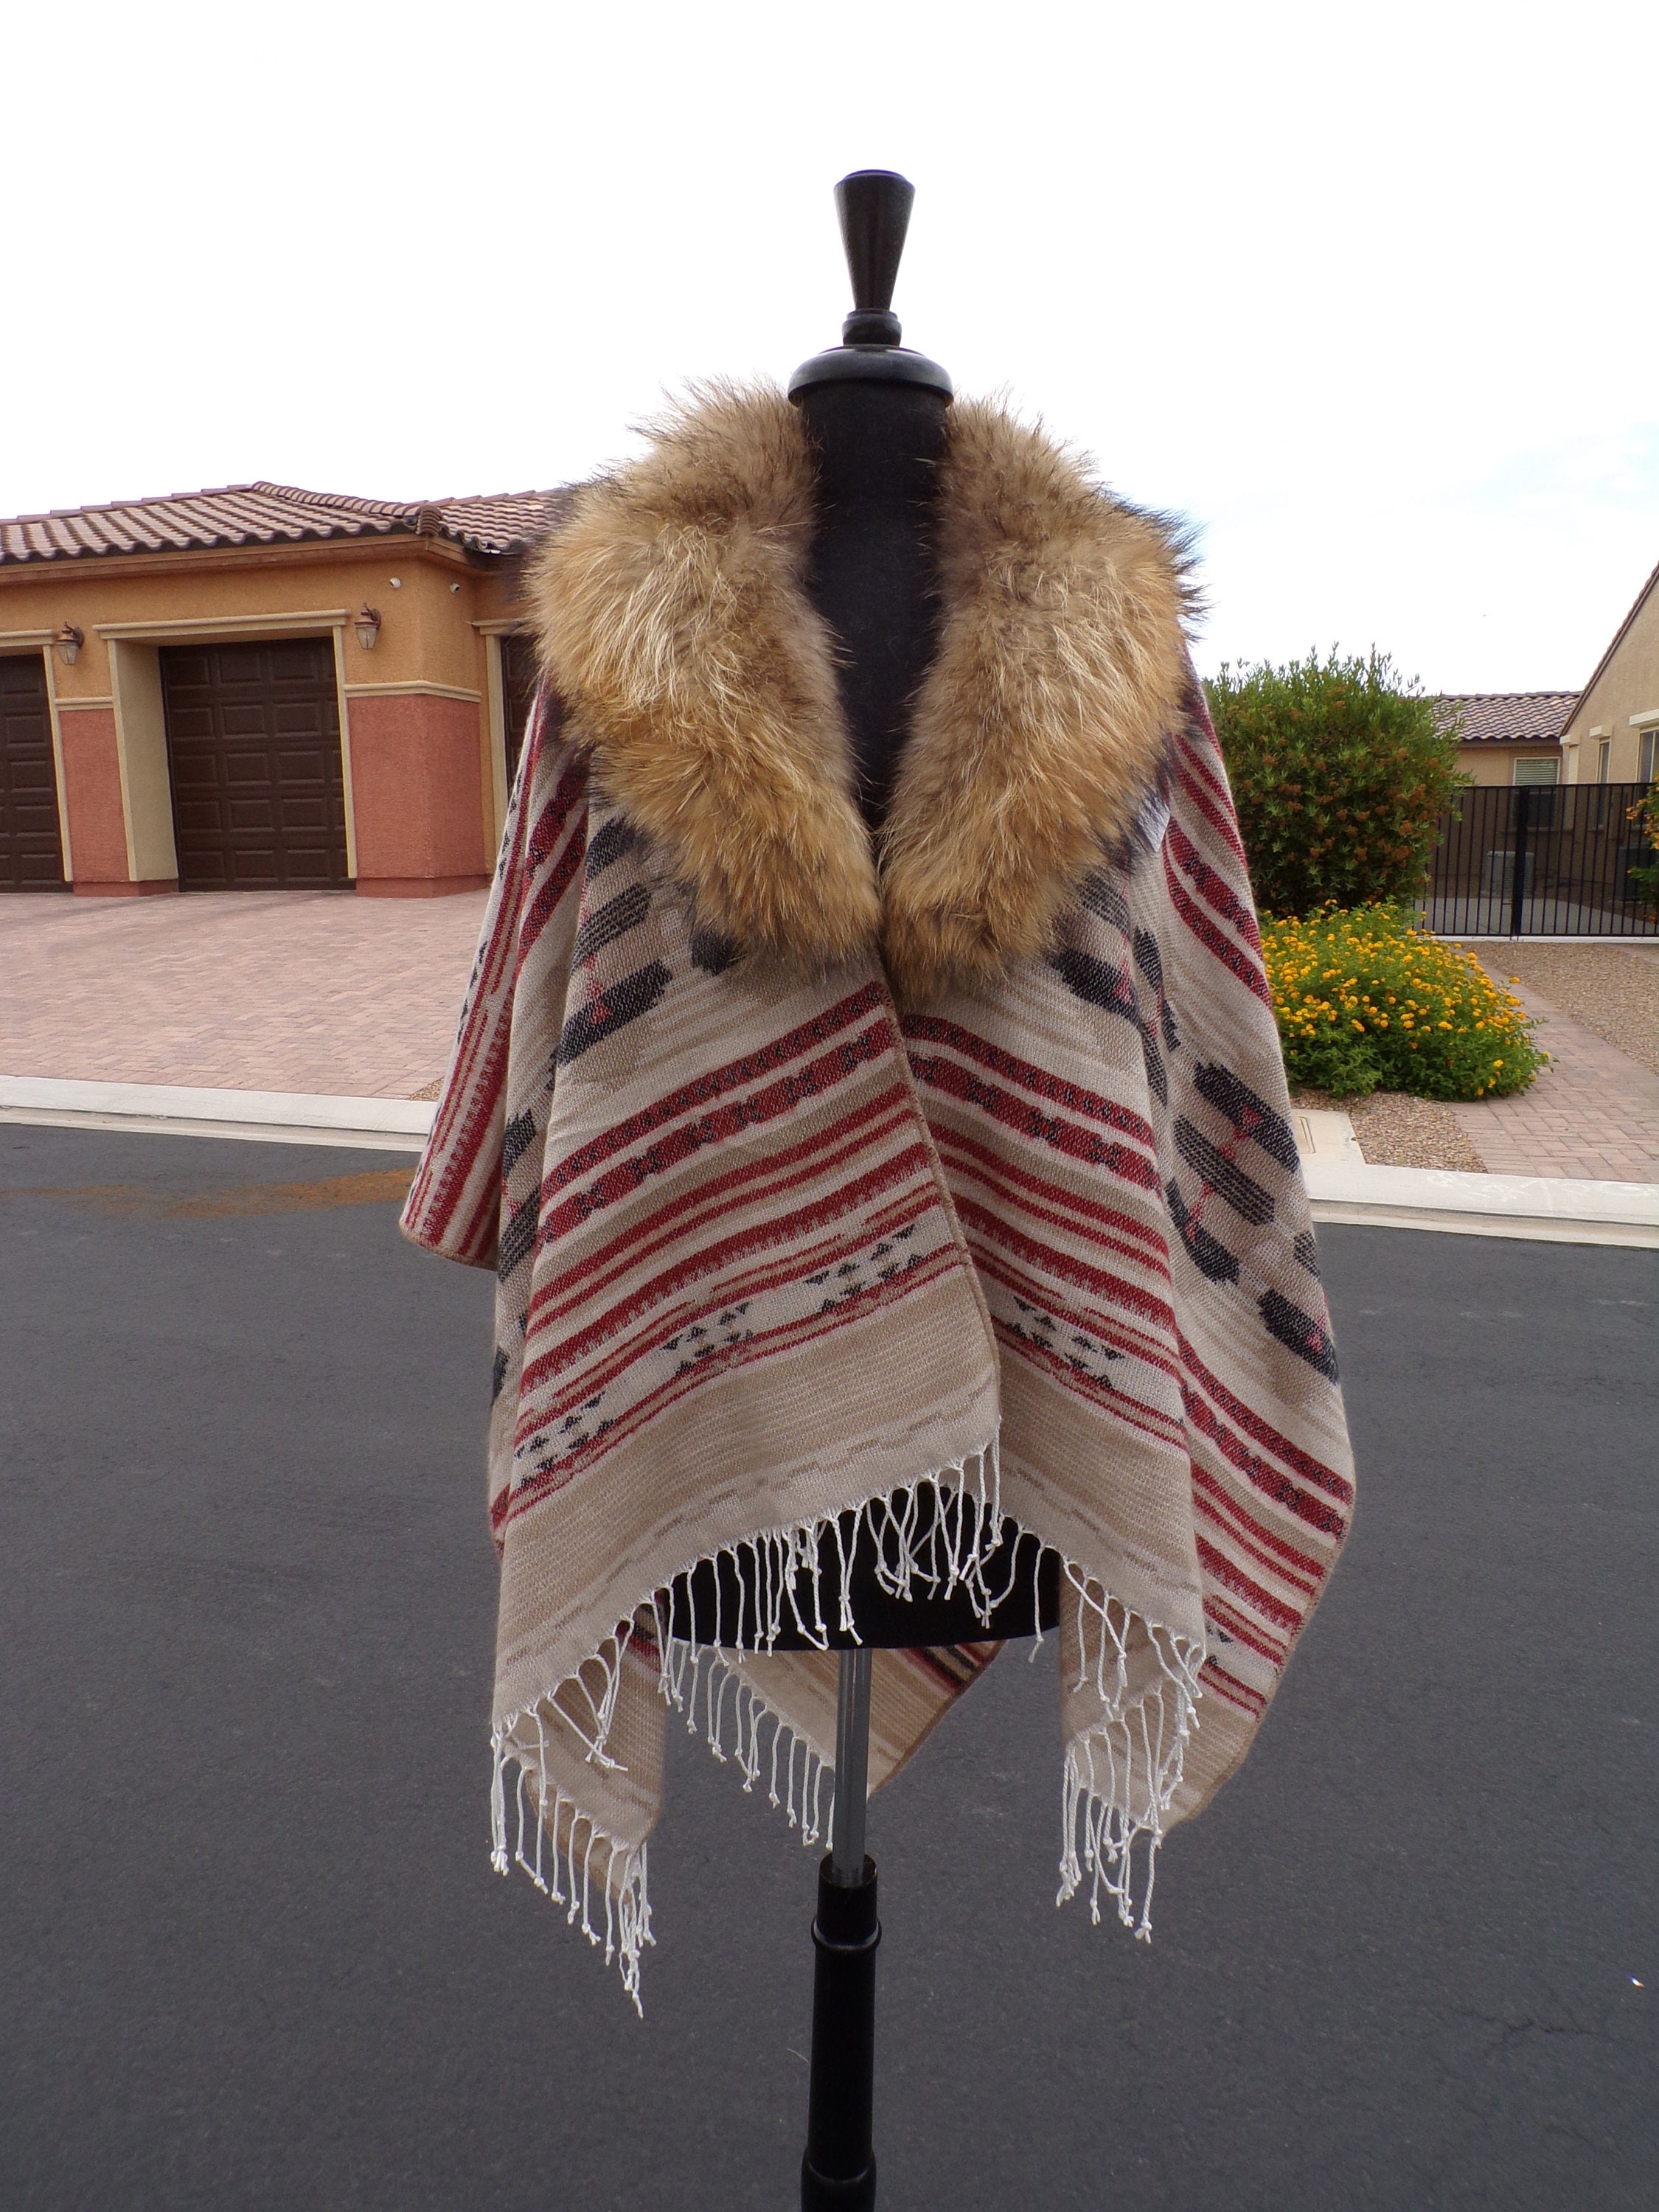 Winter Real Fox Fur Scarf for Women-Fur Sleeveless Shawl Wraps